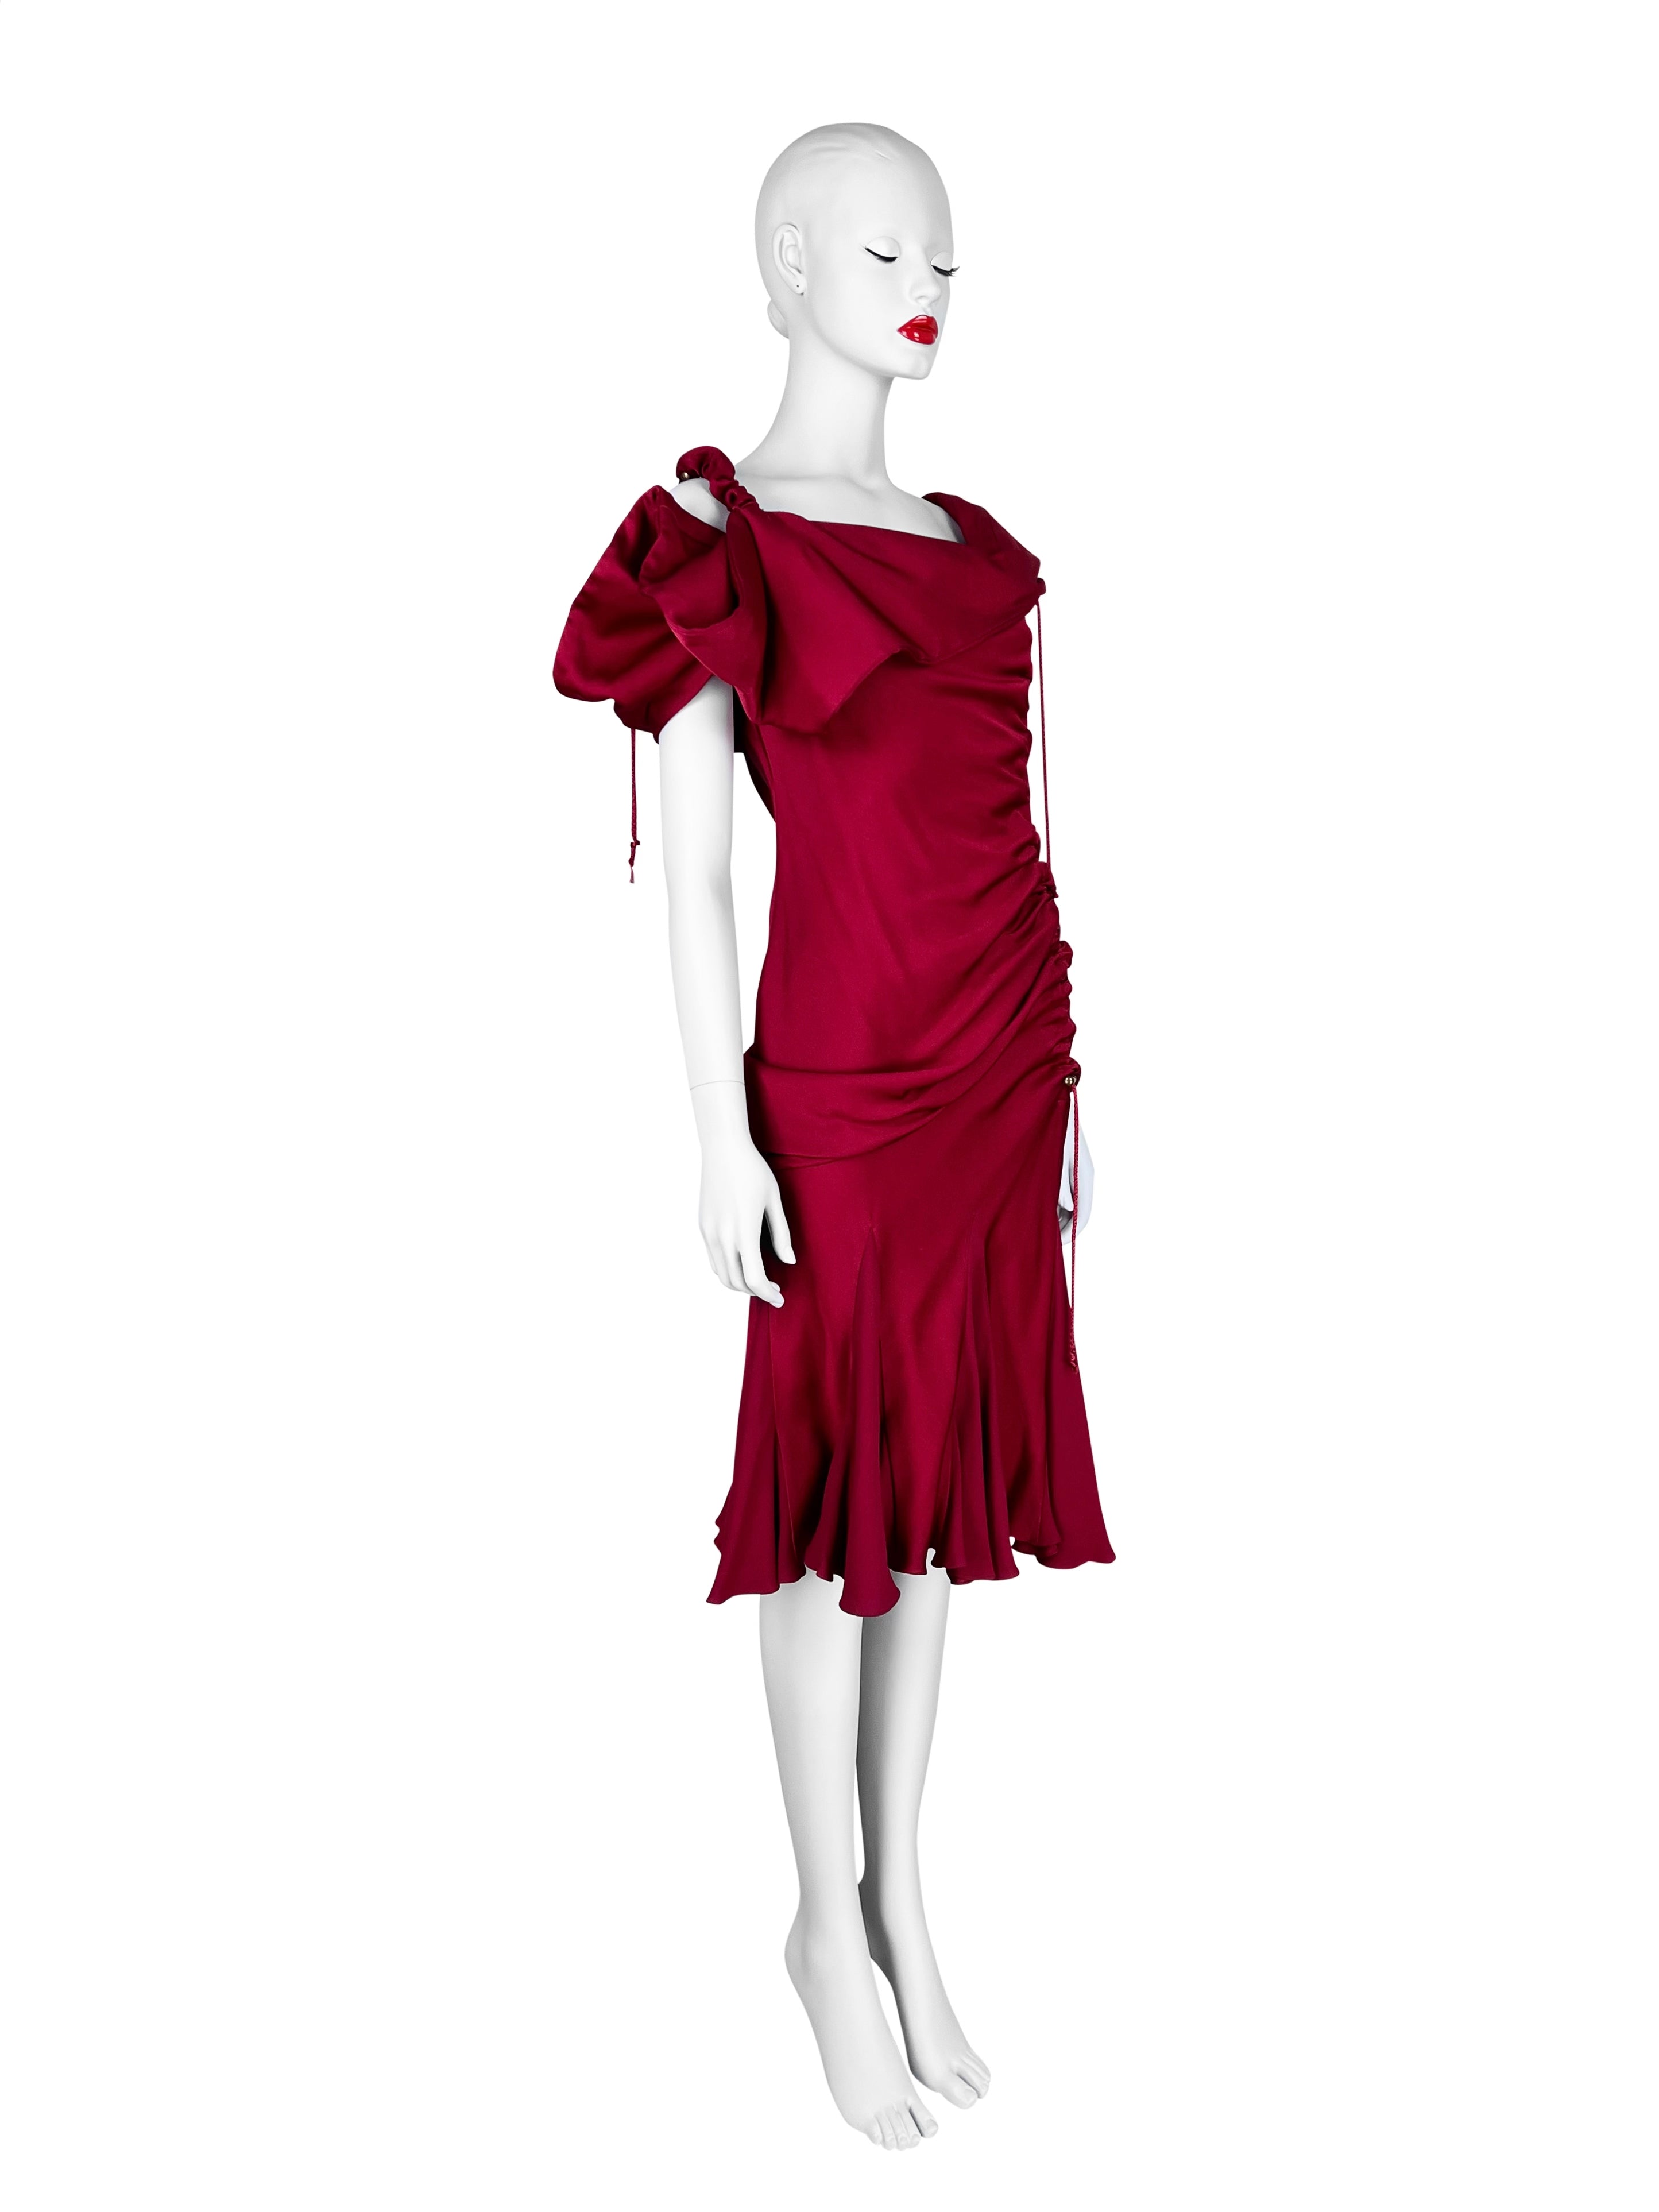 John Galliano Fall 2002 Red Draped Dress